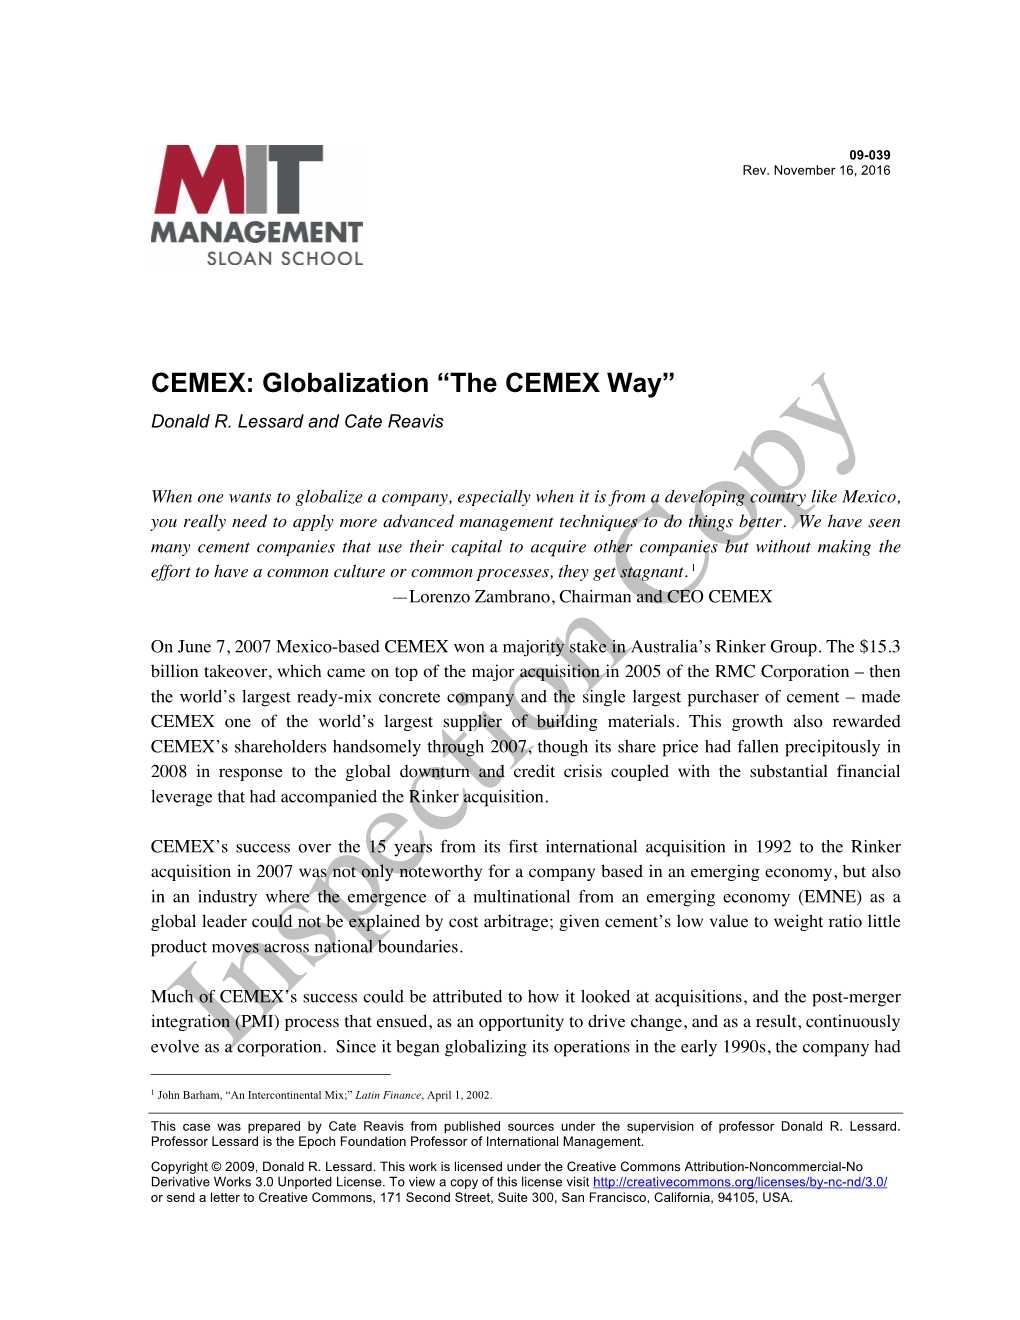 The CEMEX Way” Donald R